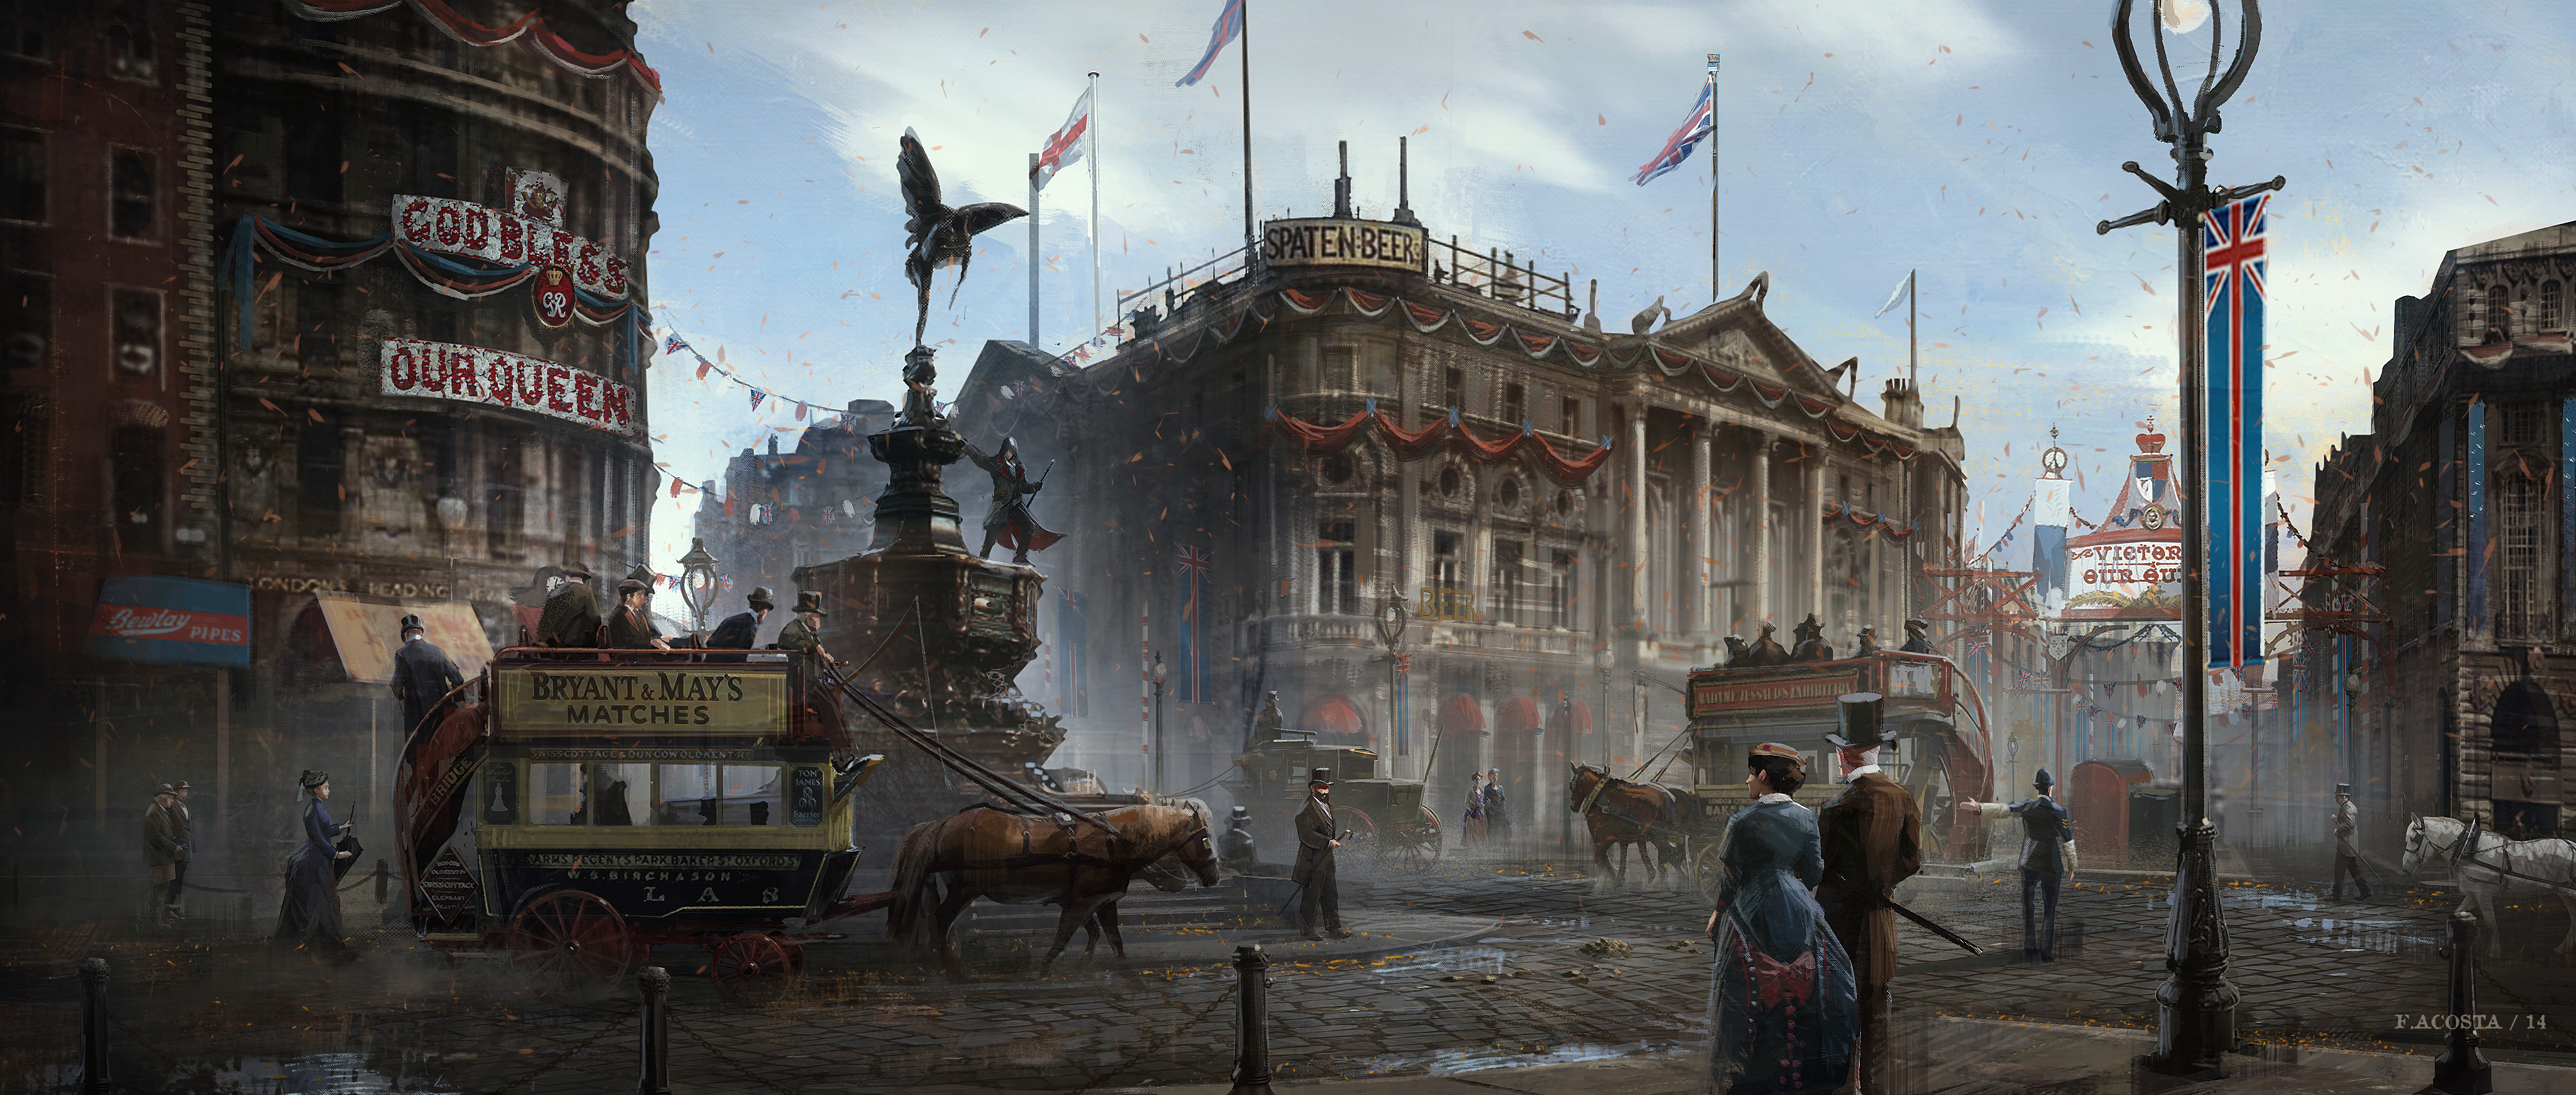 Скачать обои бесплатно Видеоигры, Кредо Ассасина, Assassin's Creed: Синдикат картинка на рабочий стол ПК